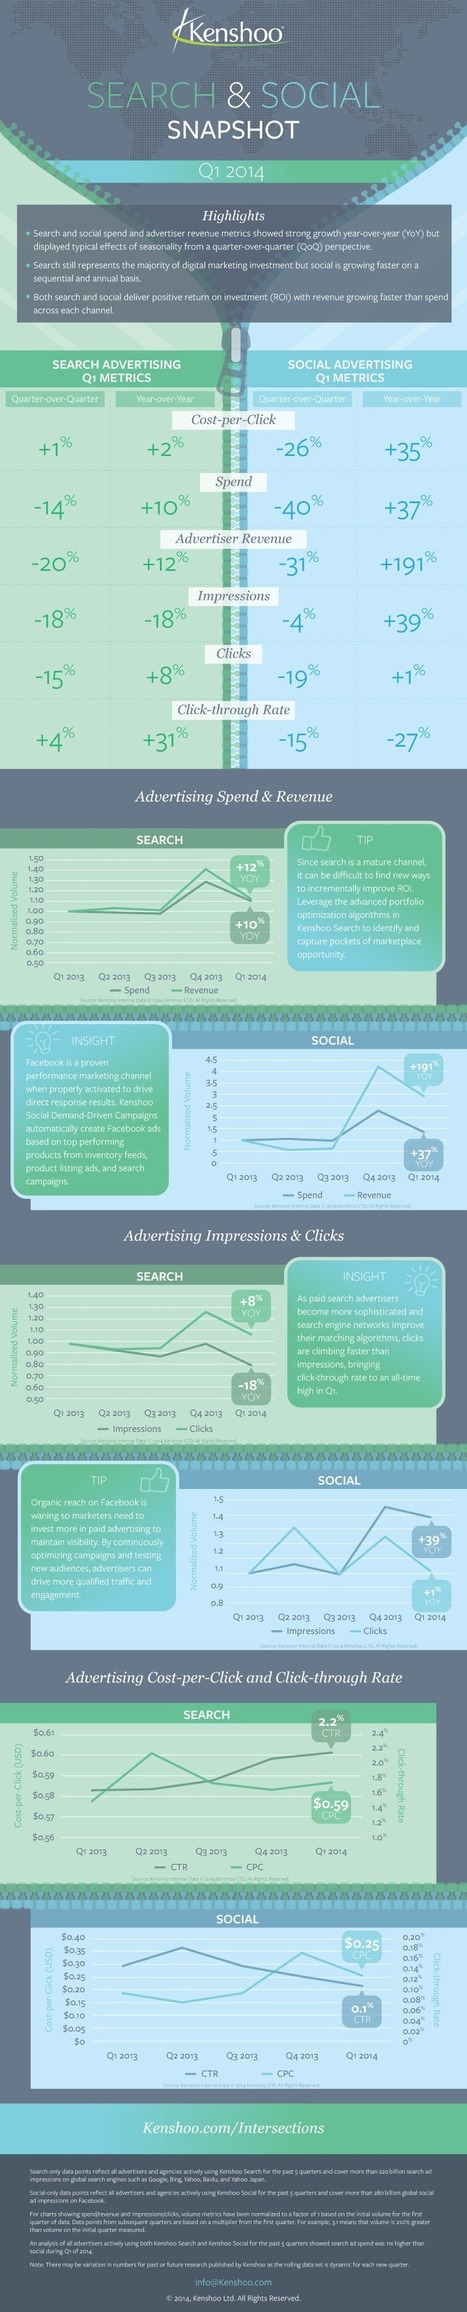 Infographic: Search versus Social Advertising - The Drum | #TheMarketingTechAlert | The MarTech Digest | Scoop.it